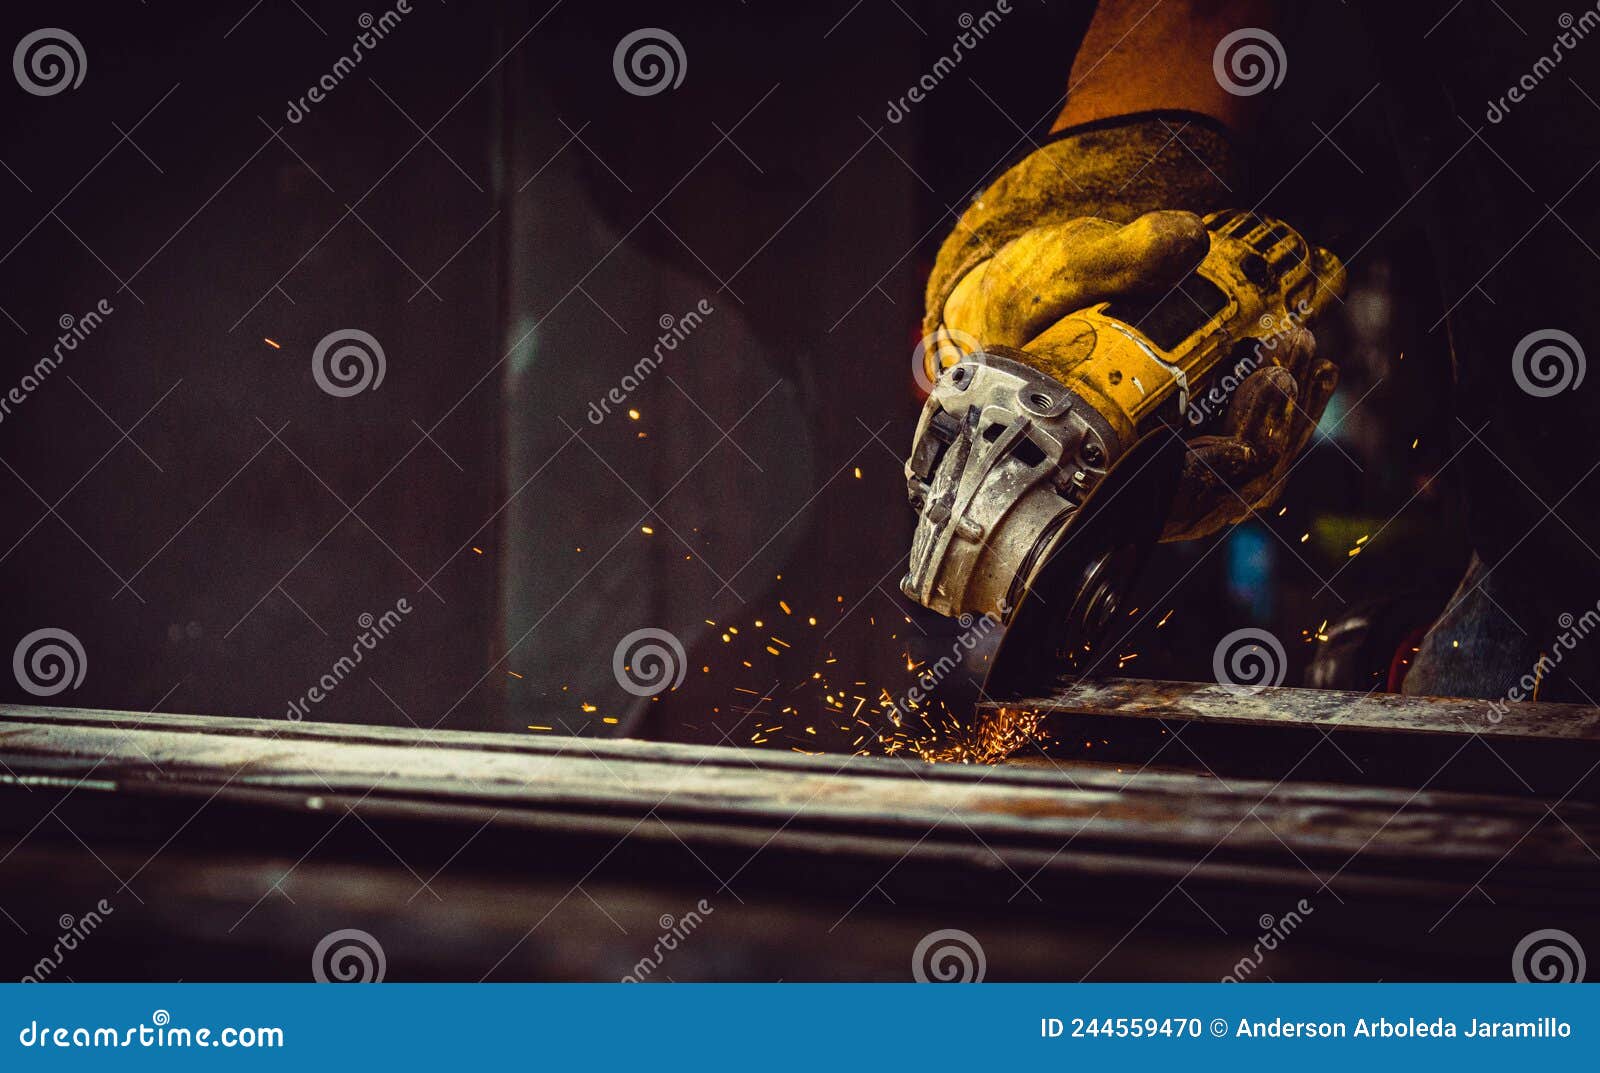 construction tool cutting metal